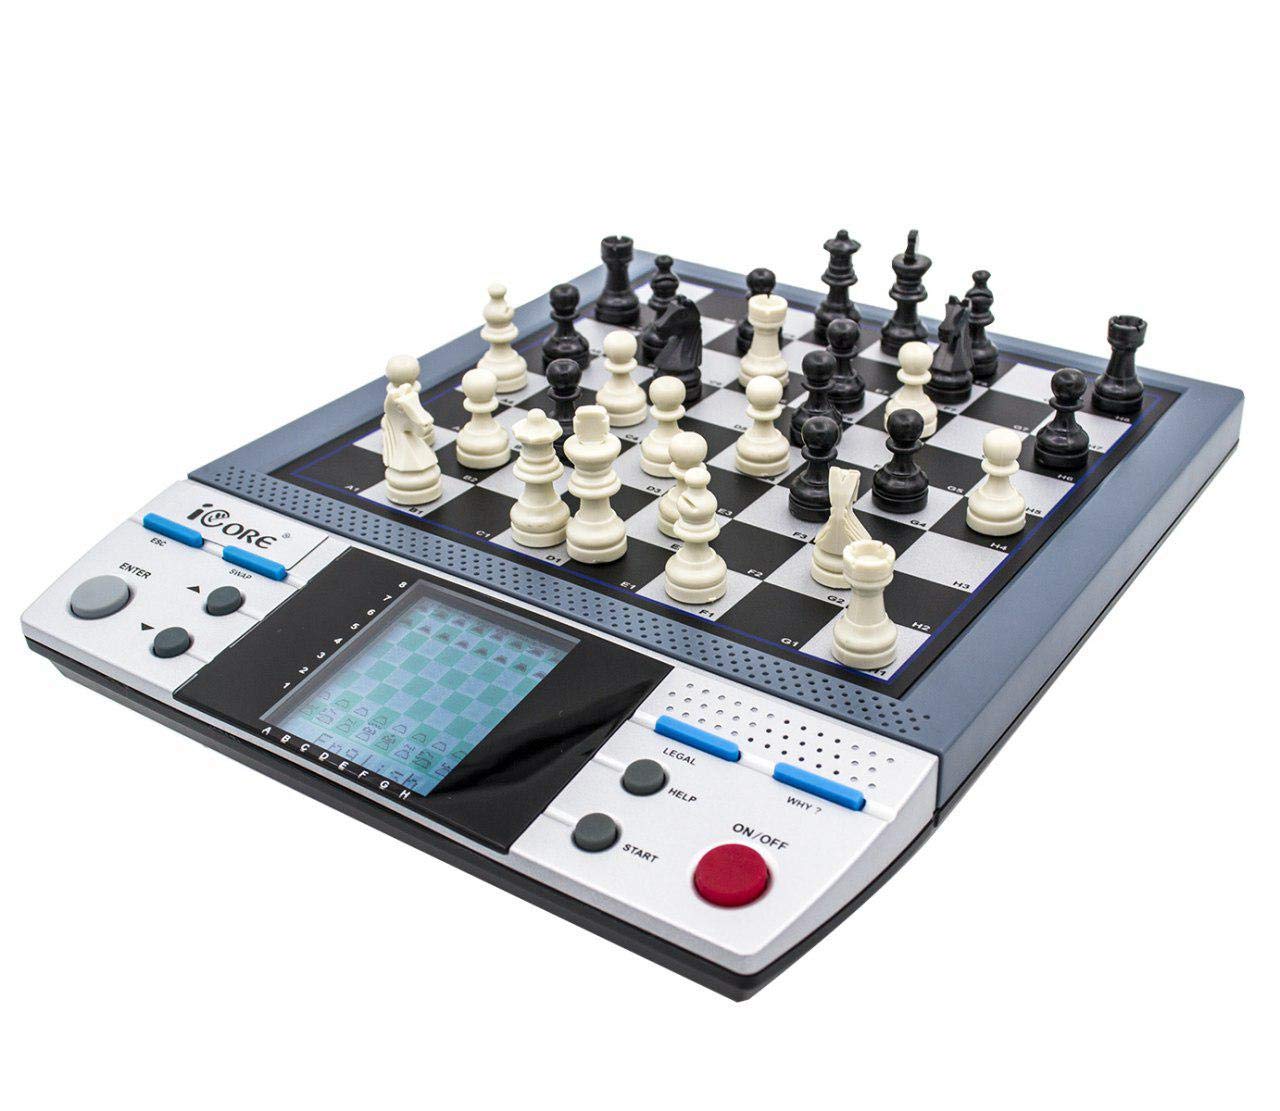 Buy iCore Electronic Chess Set - Talking Chess Computer Set, Board